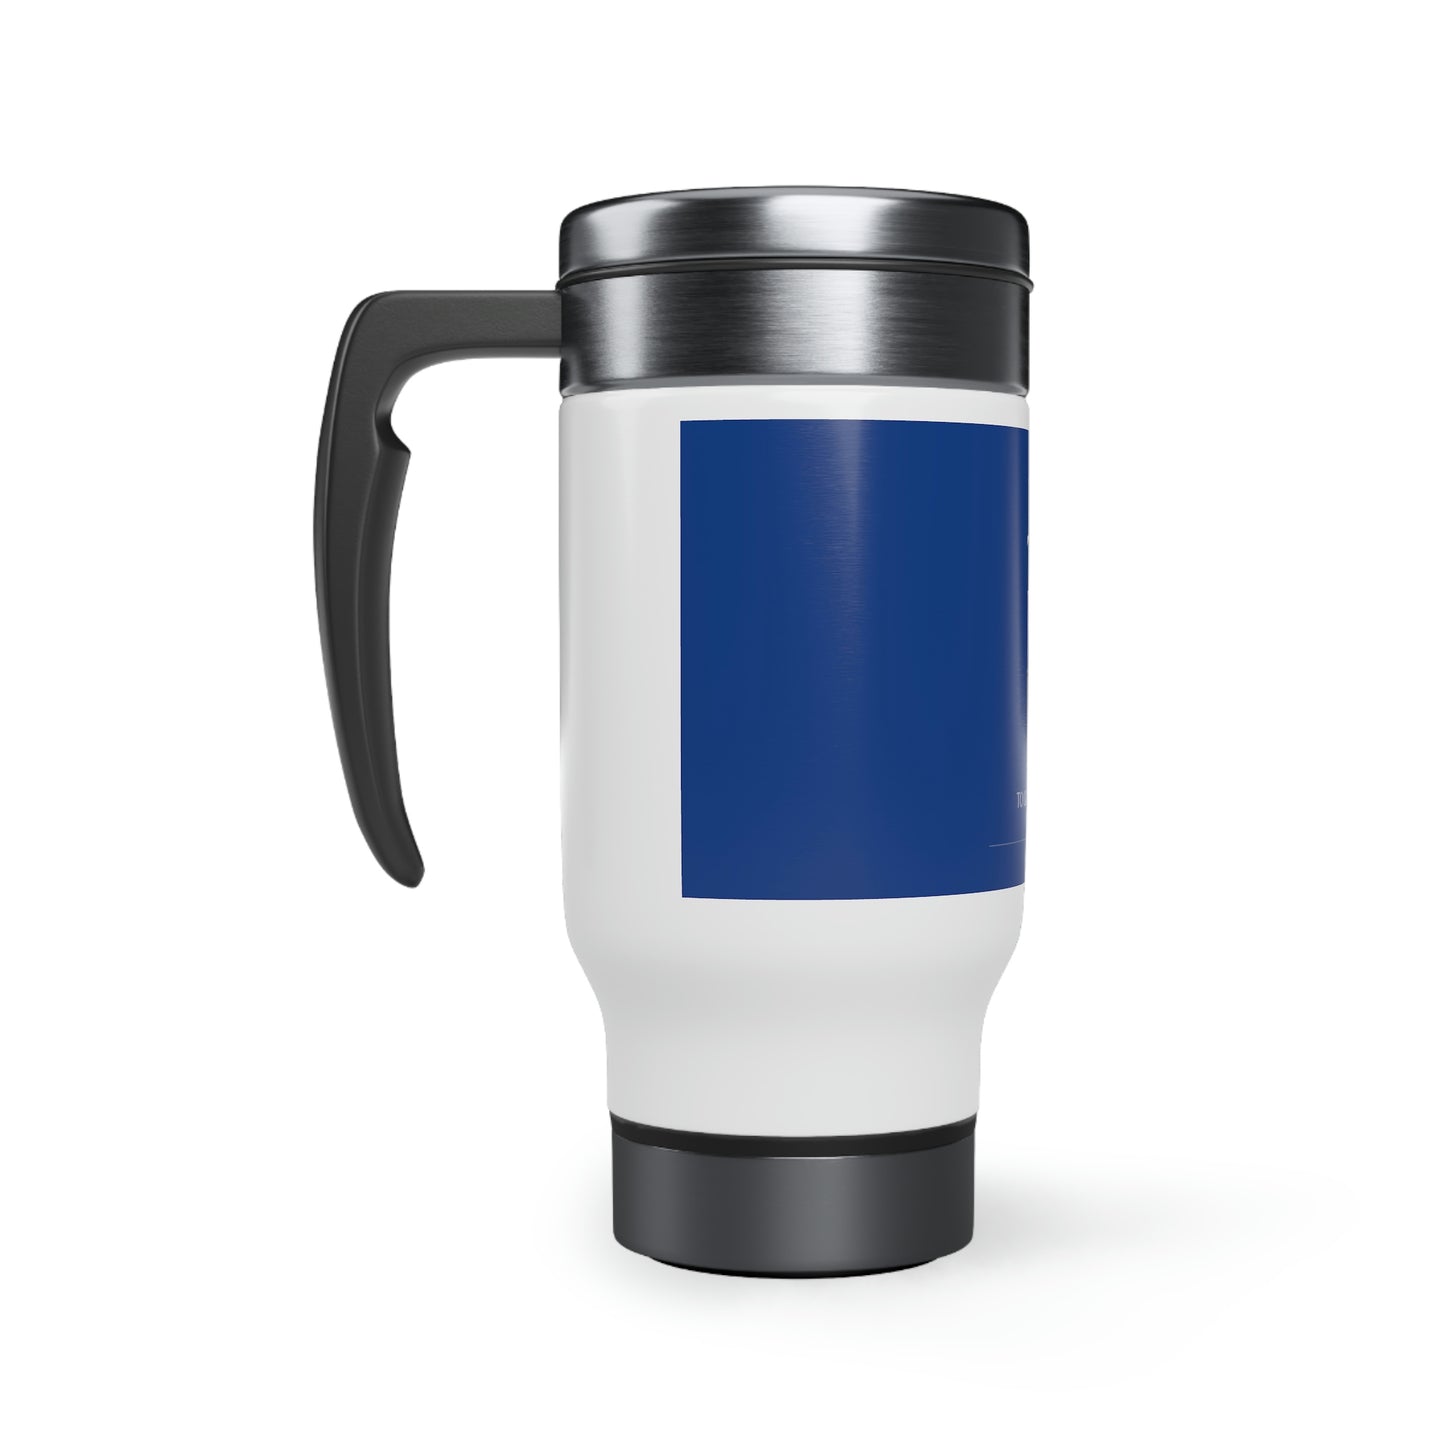 Blue TGBTG Stainless Steel Travel Mug with Handle, 14oz